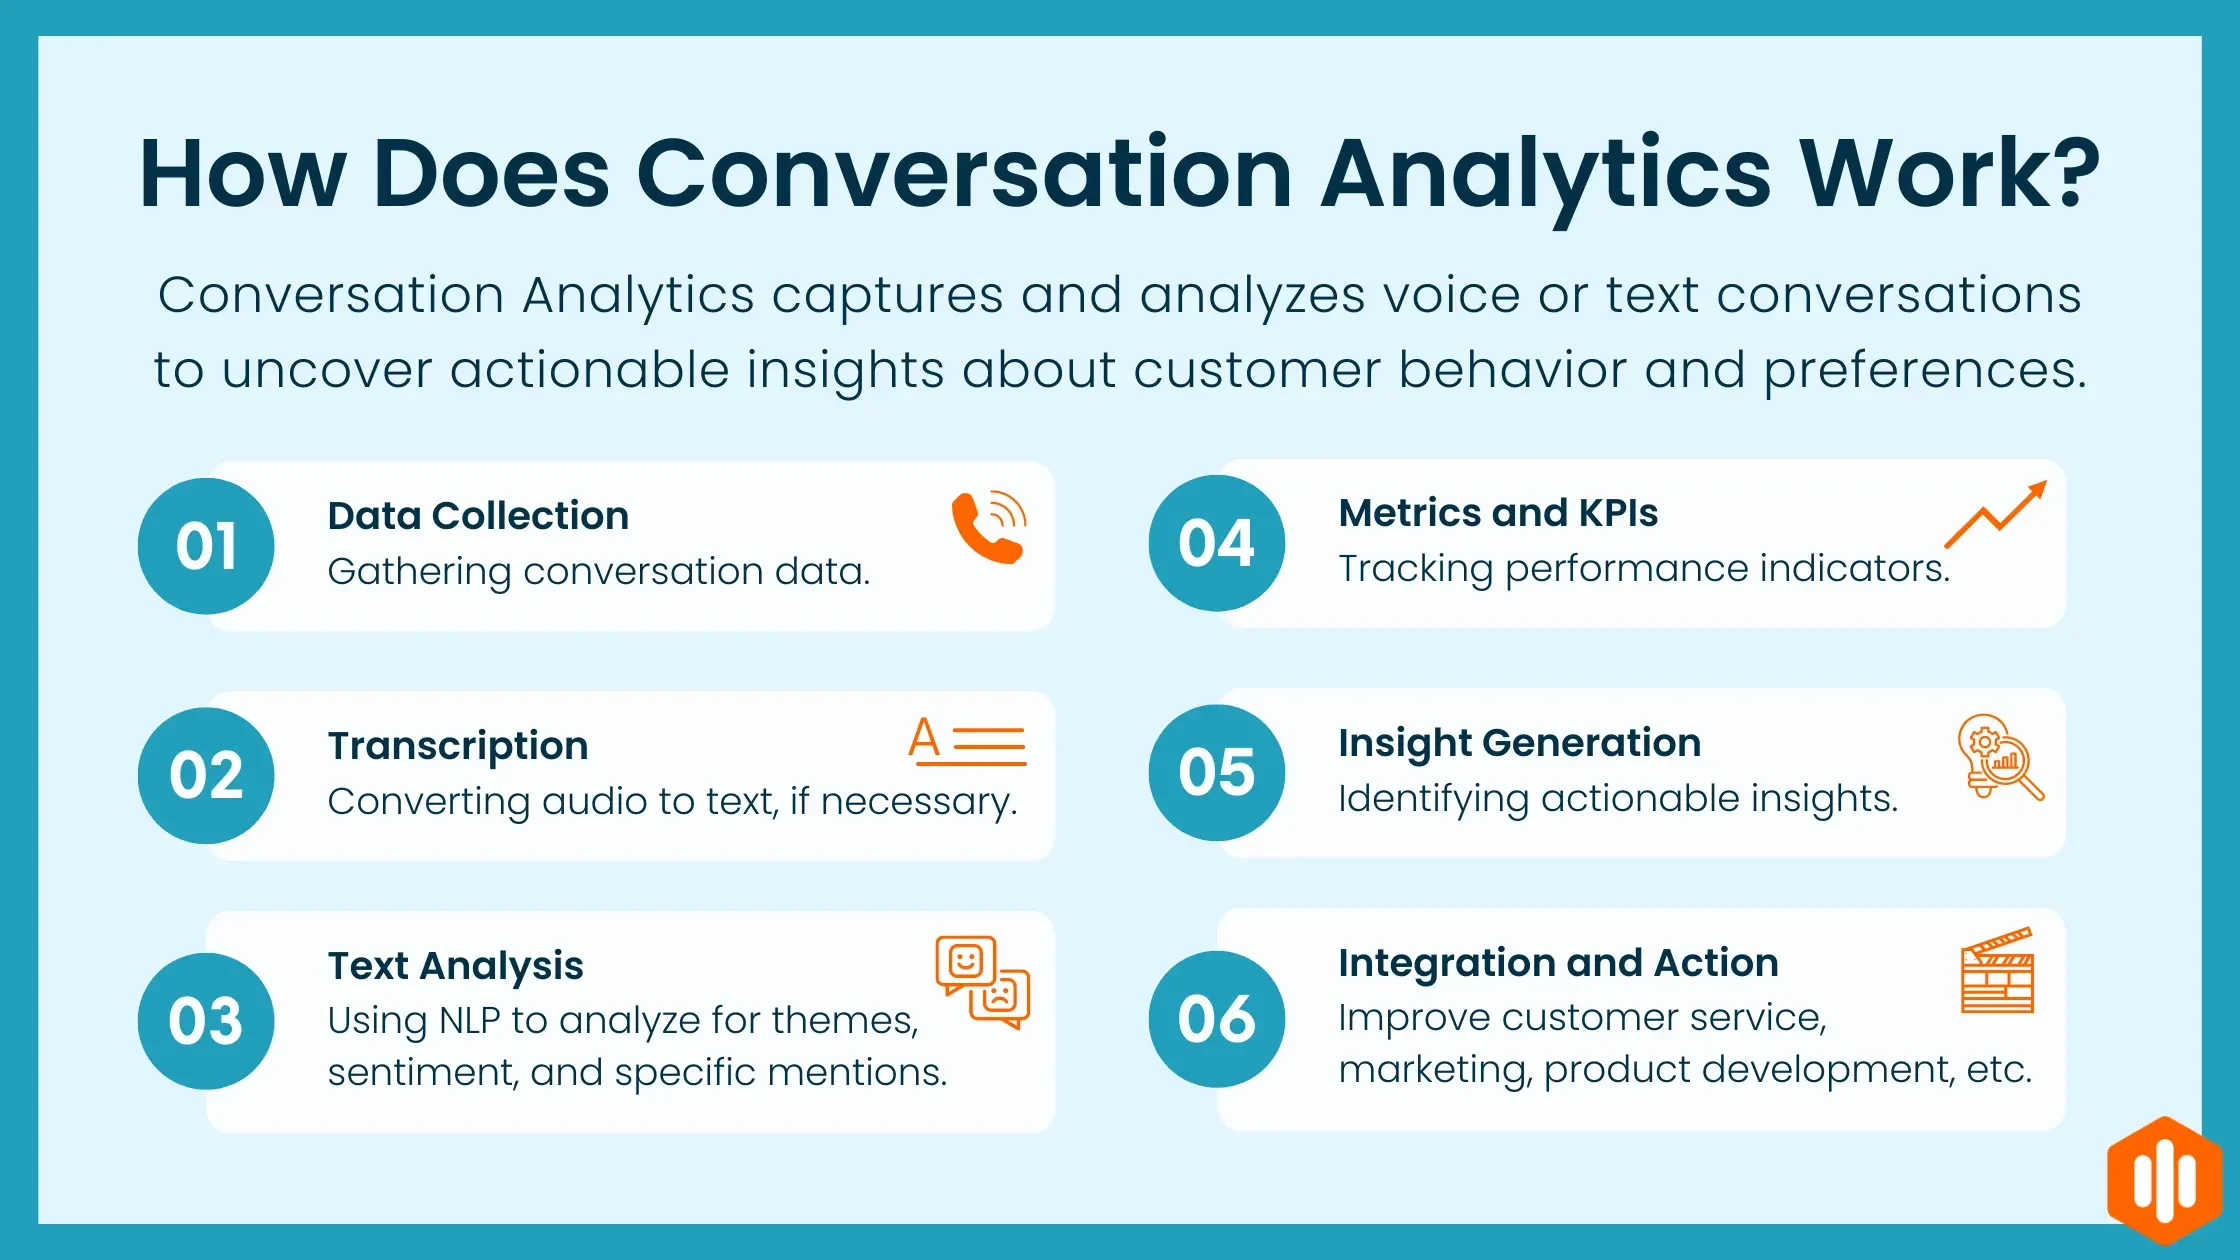 How does Conversation Analytics work?